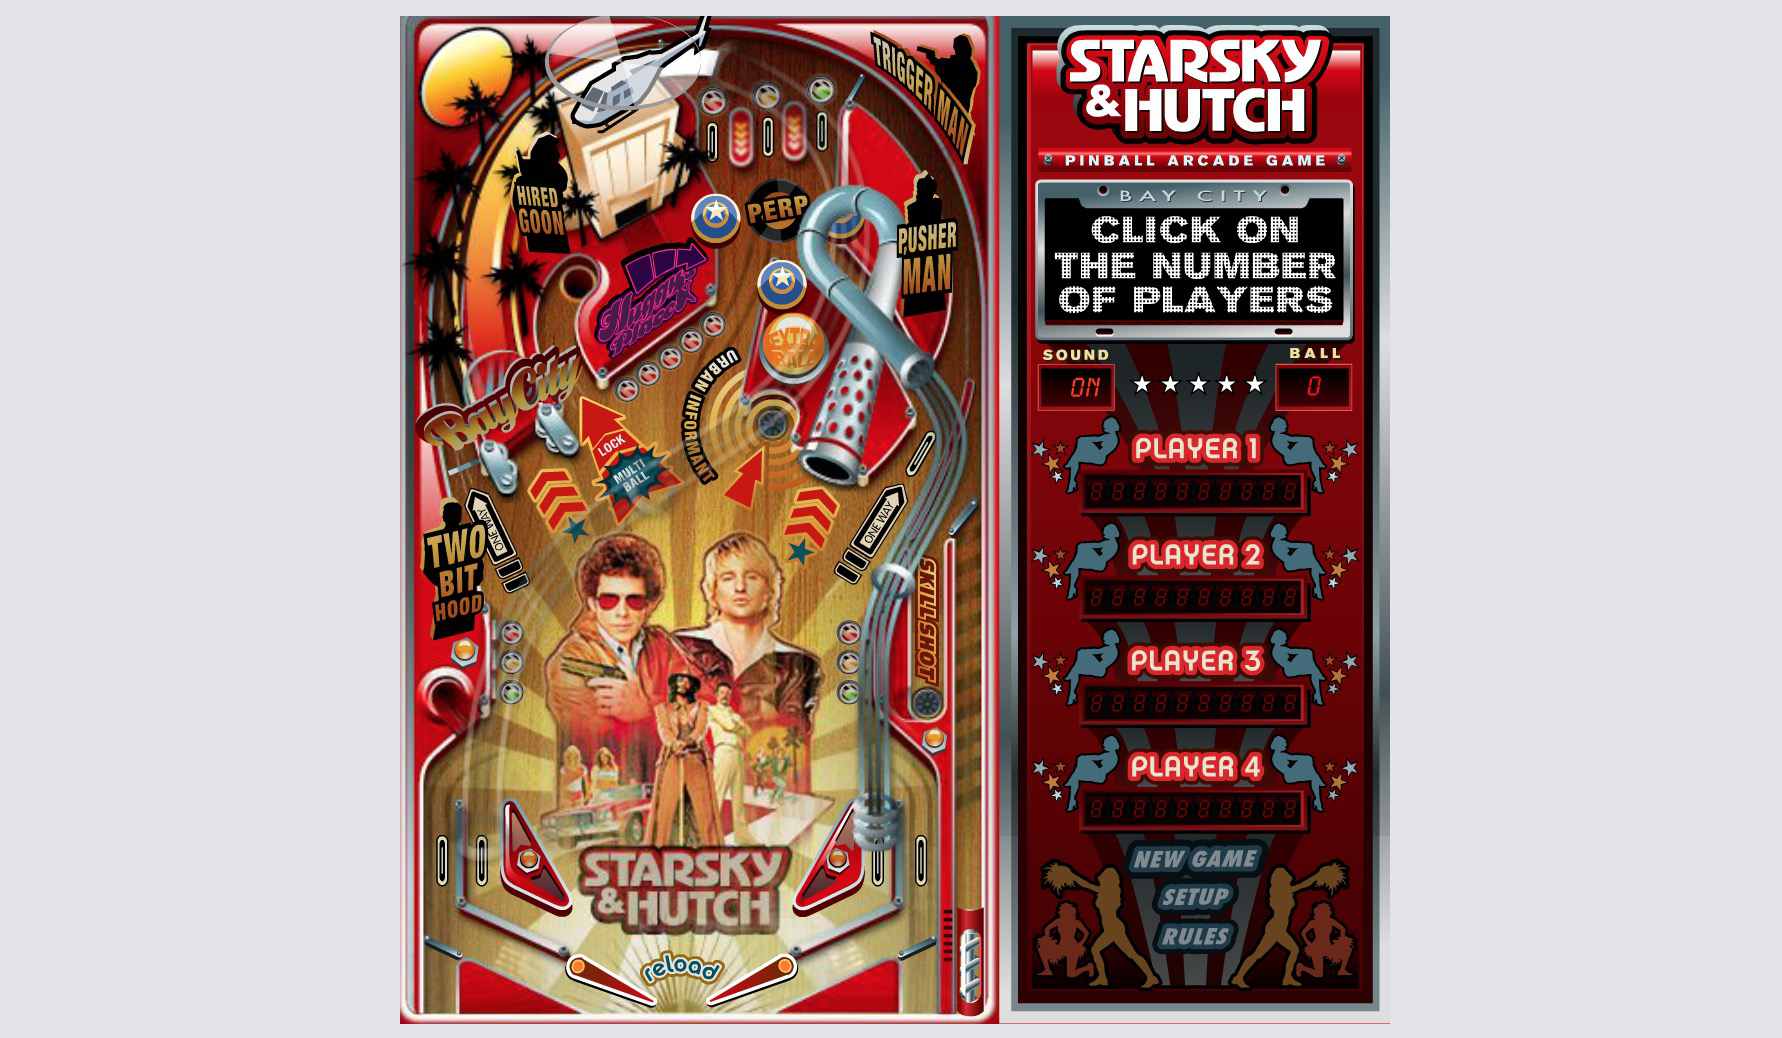 Starsky & Hutch Pinball webpagina